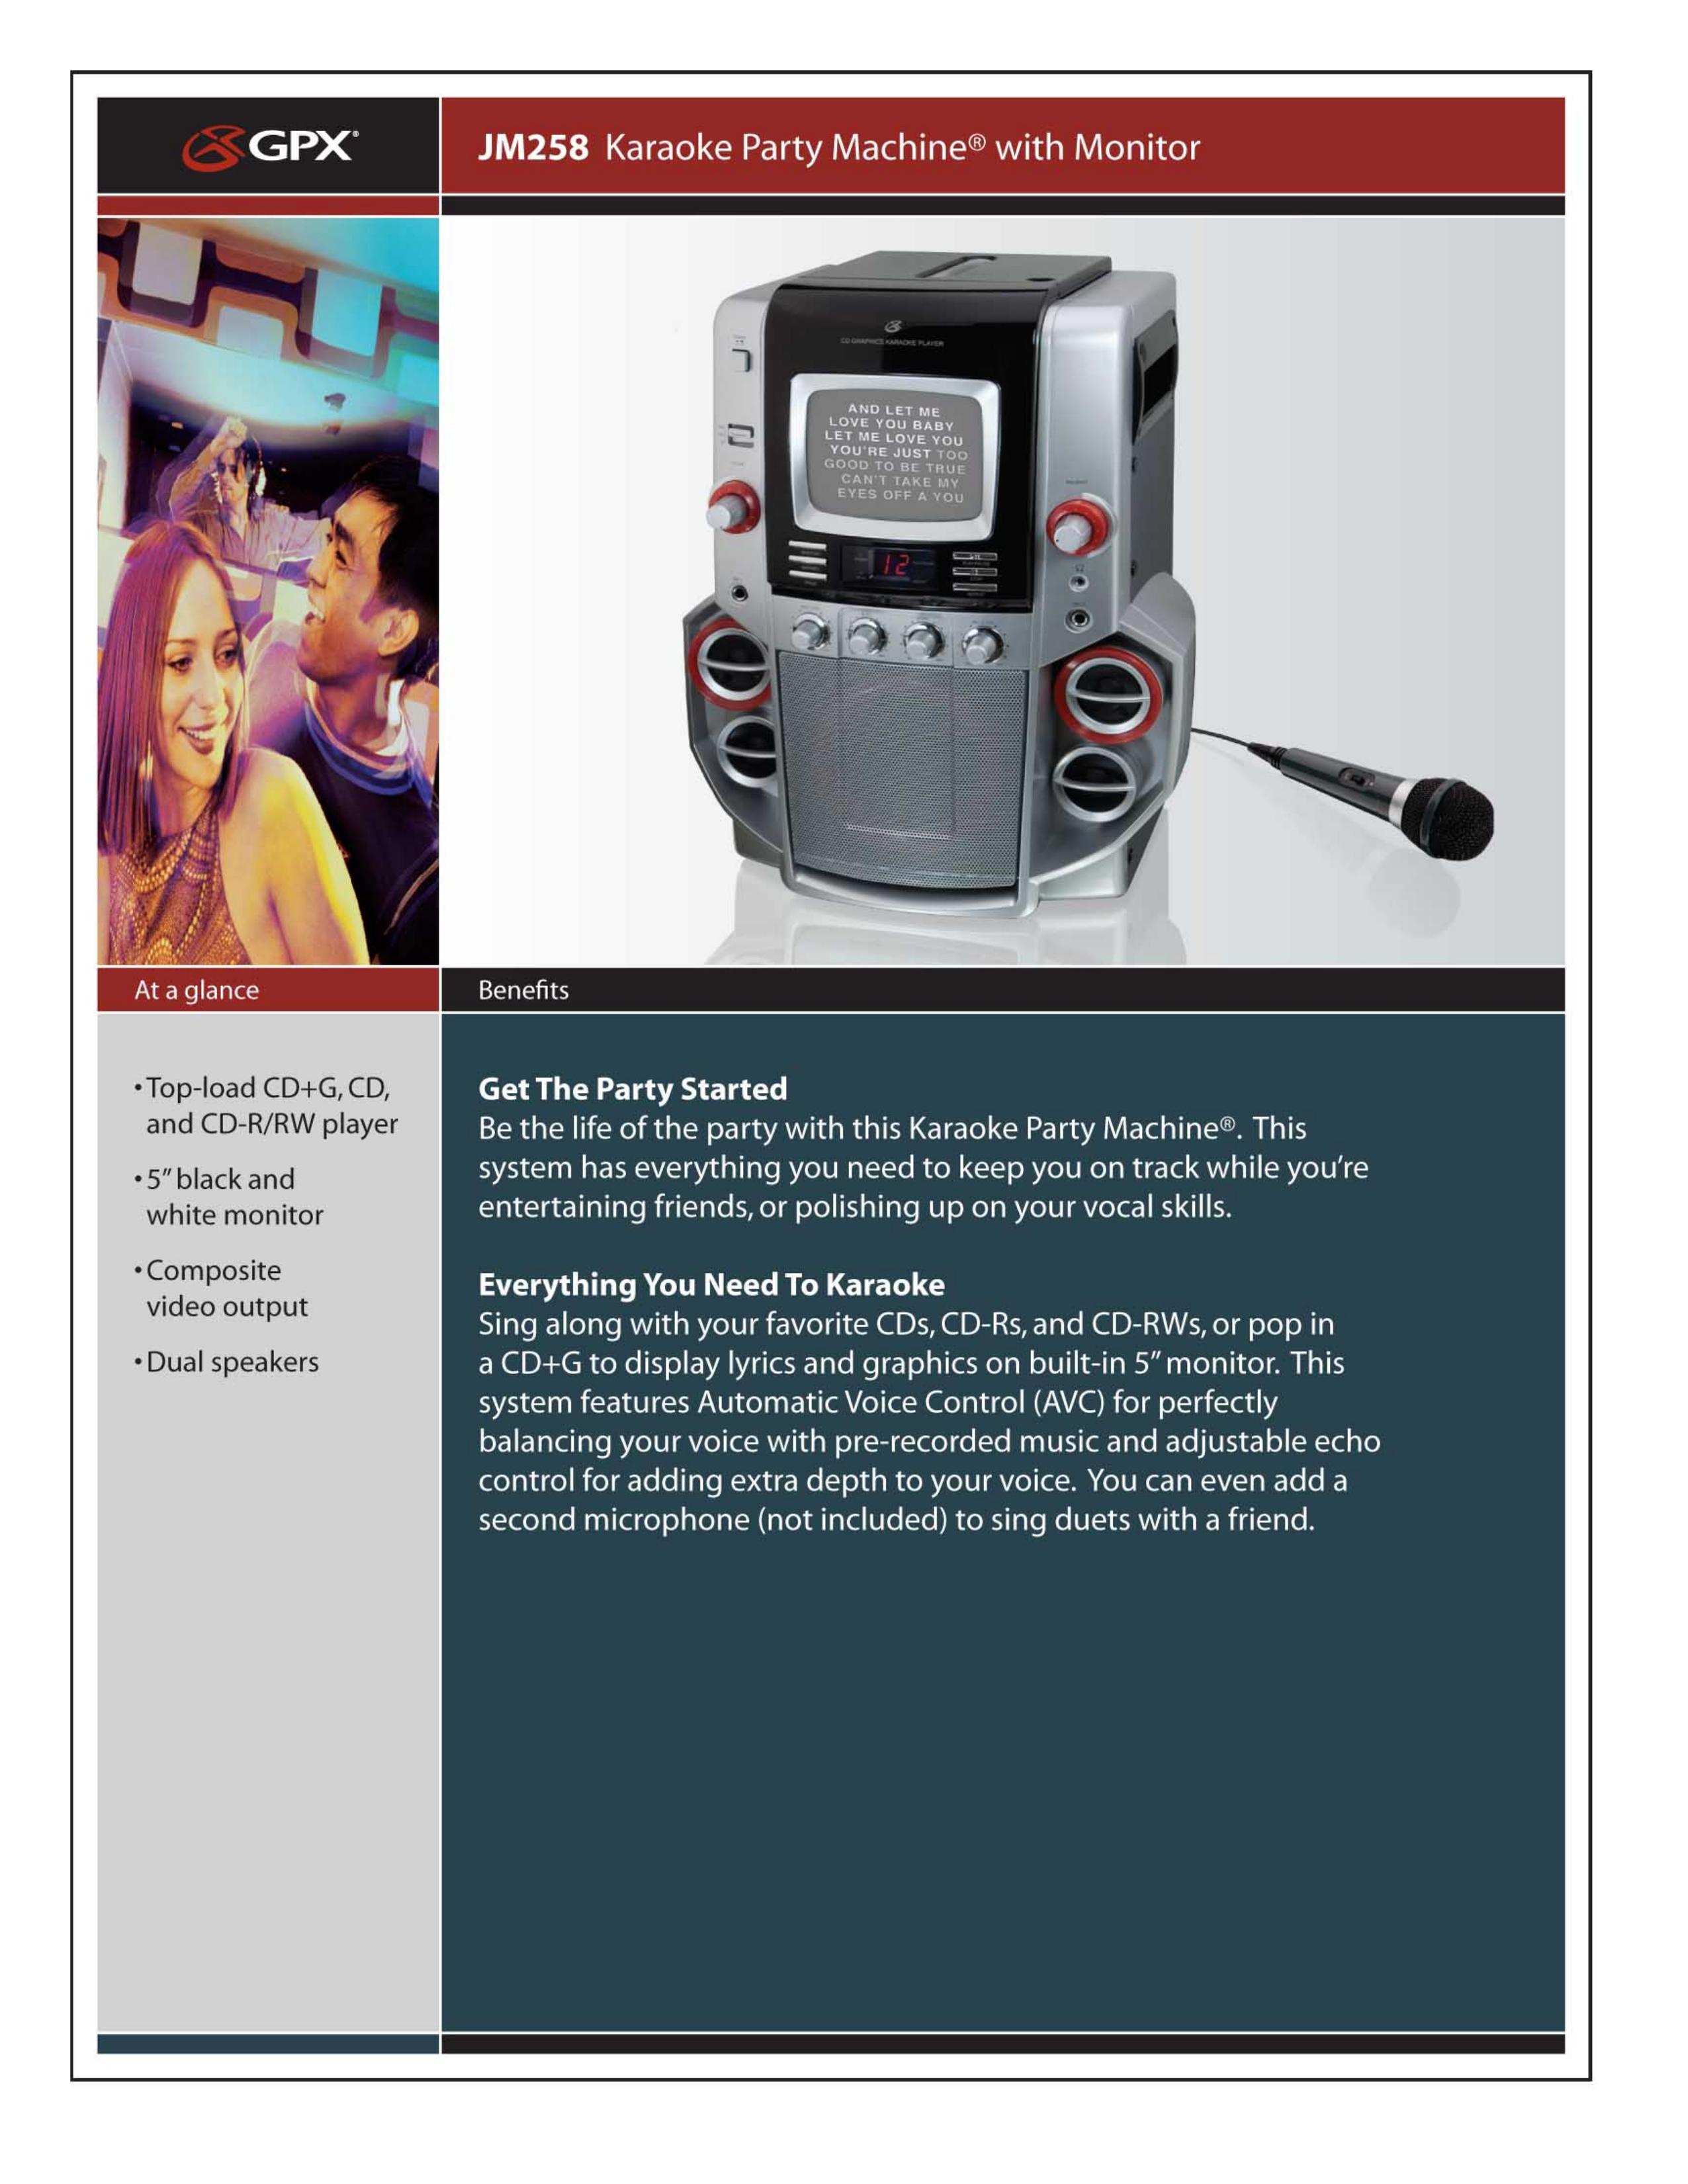 GPX jm258 Karaoke Machine User Manual